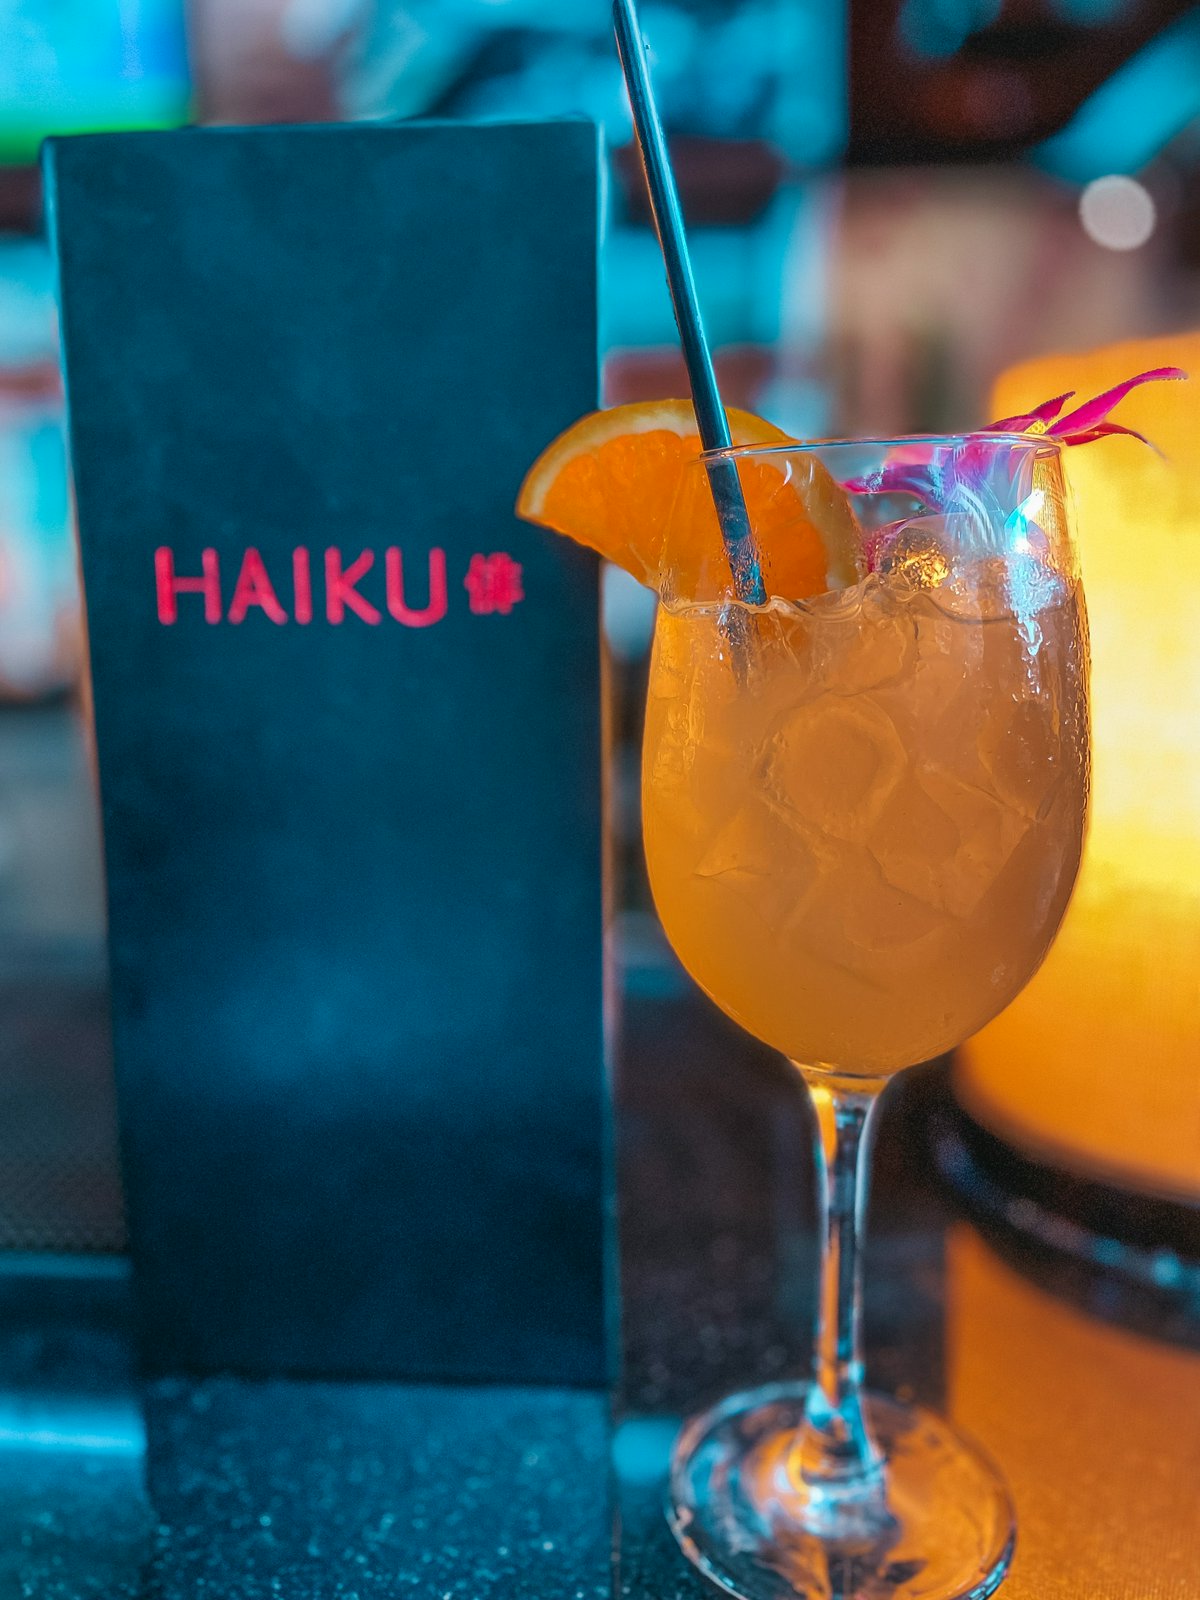 Cocktail from Haiku restaurant in Tampa